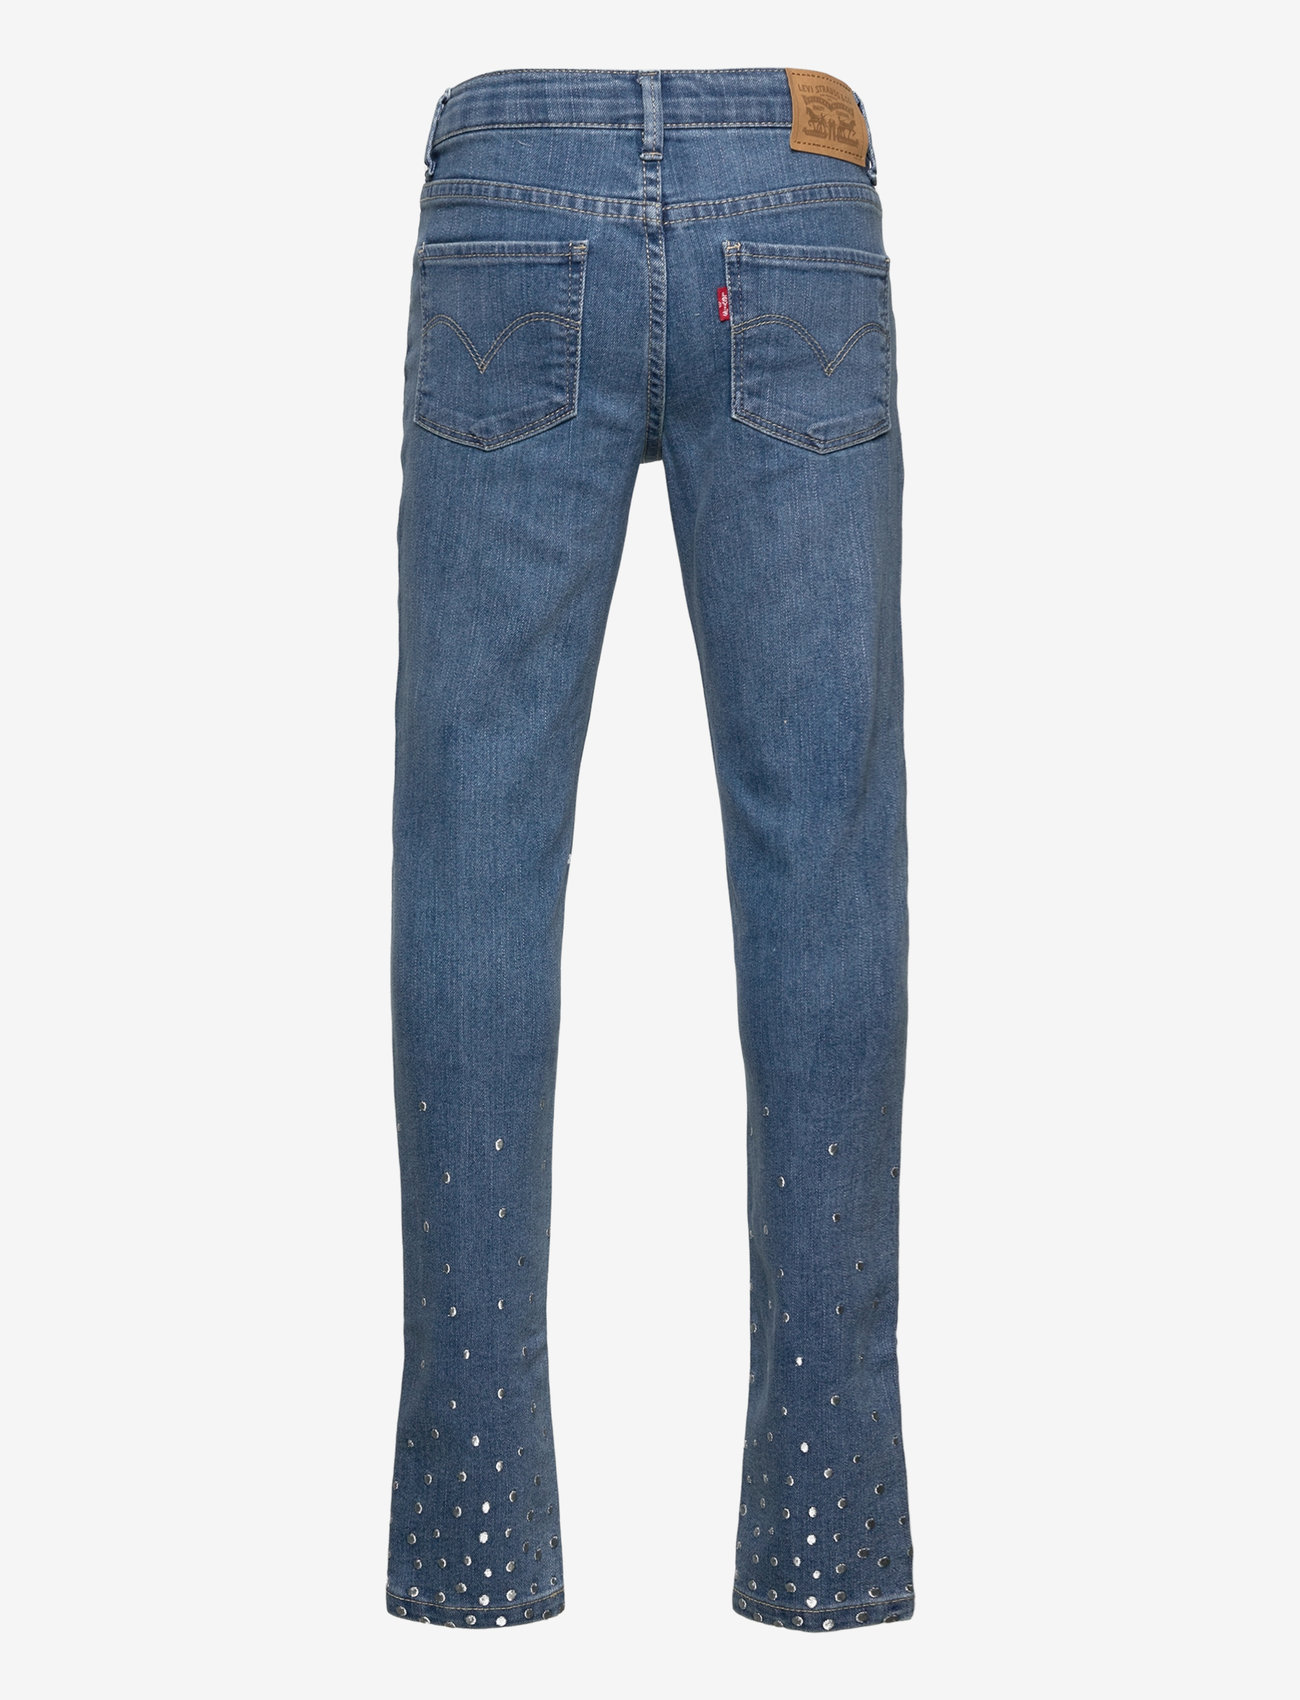 Levi's - LVG 710 SUPER SKINNY FIT JEANS - skinny jeans - sparkly night - 1